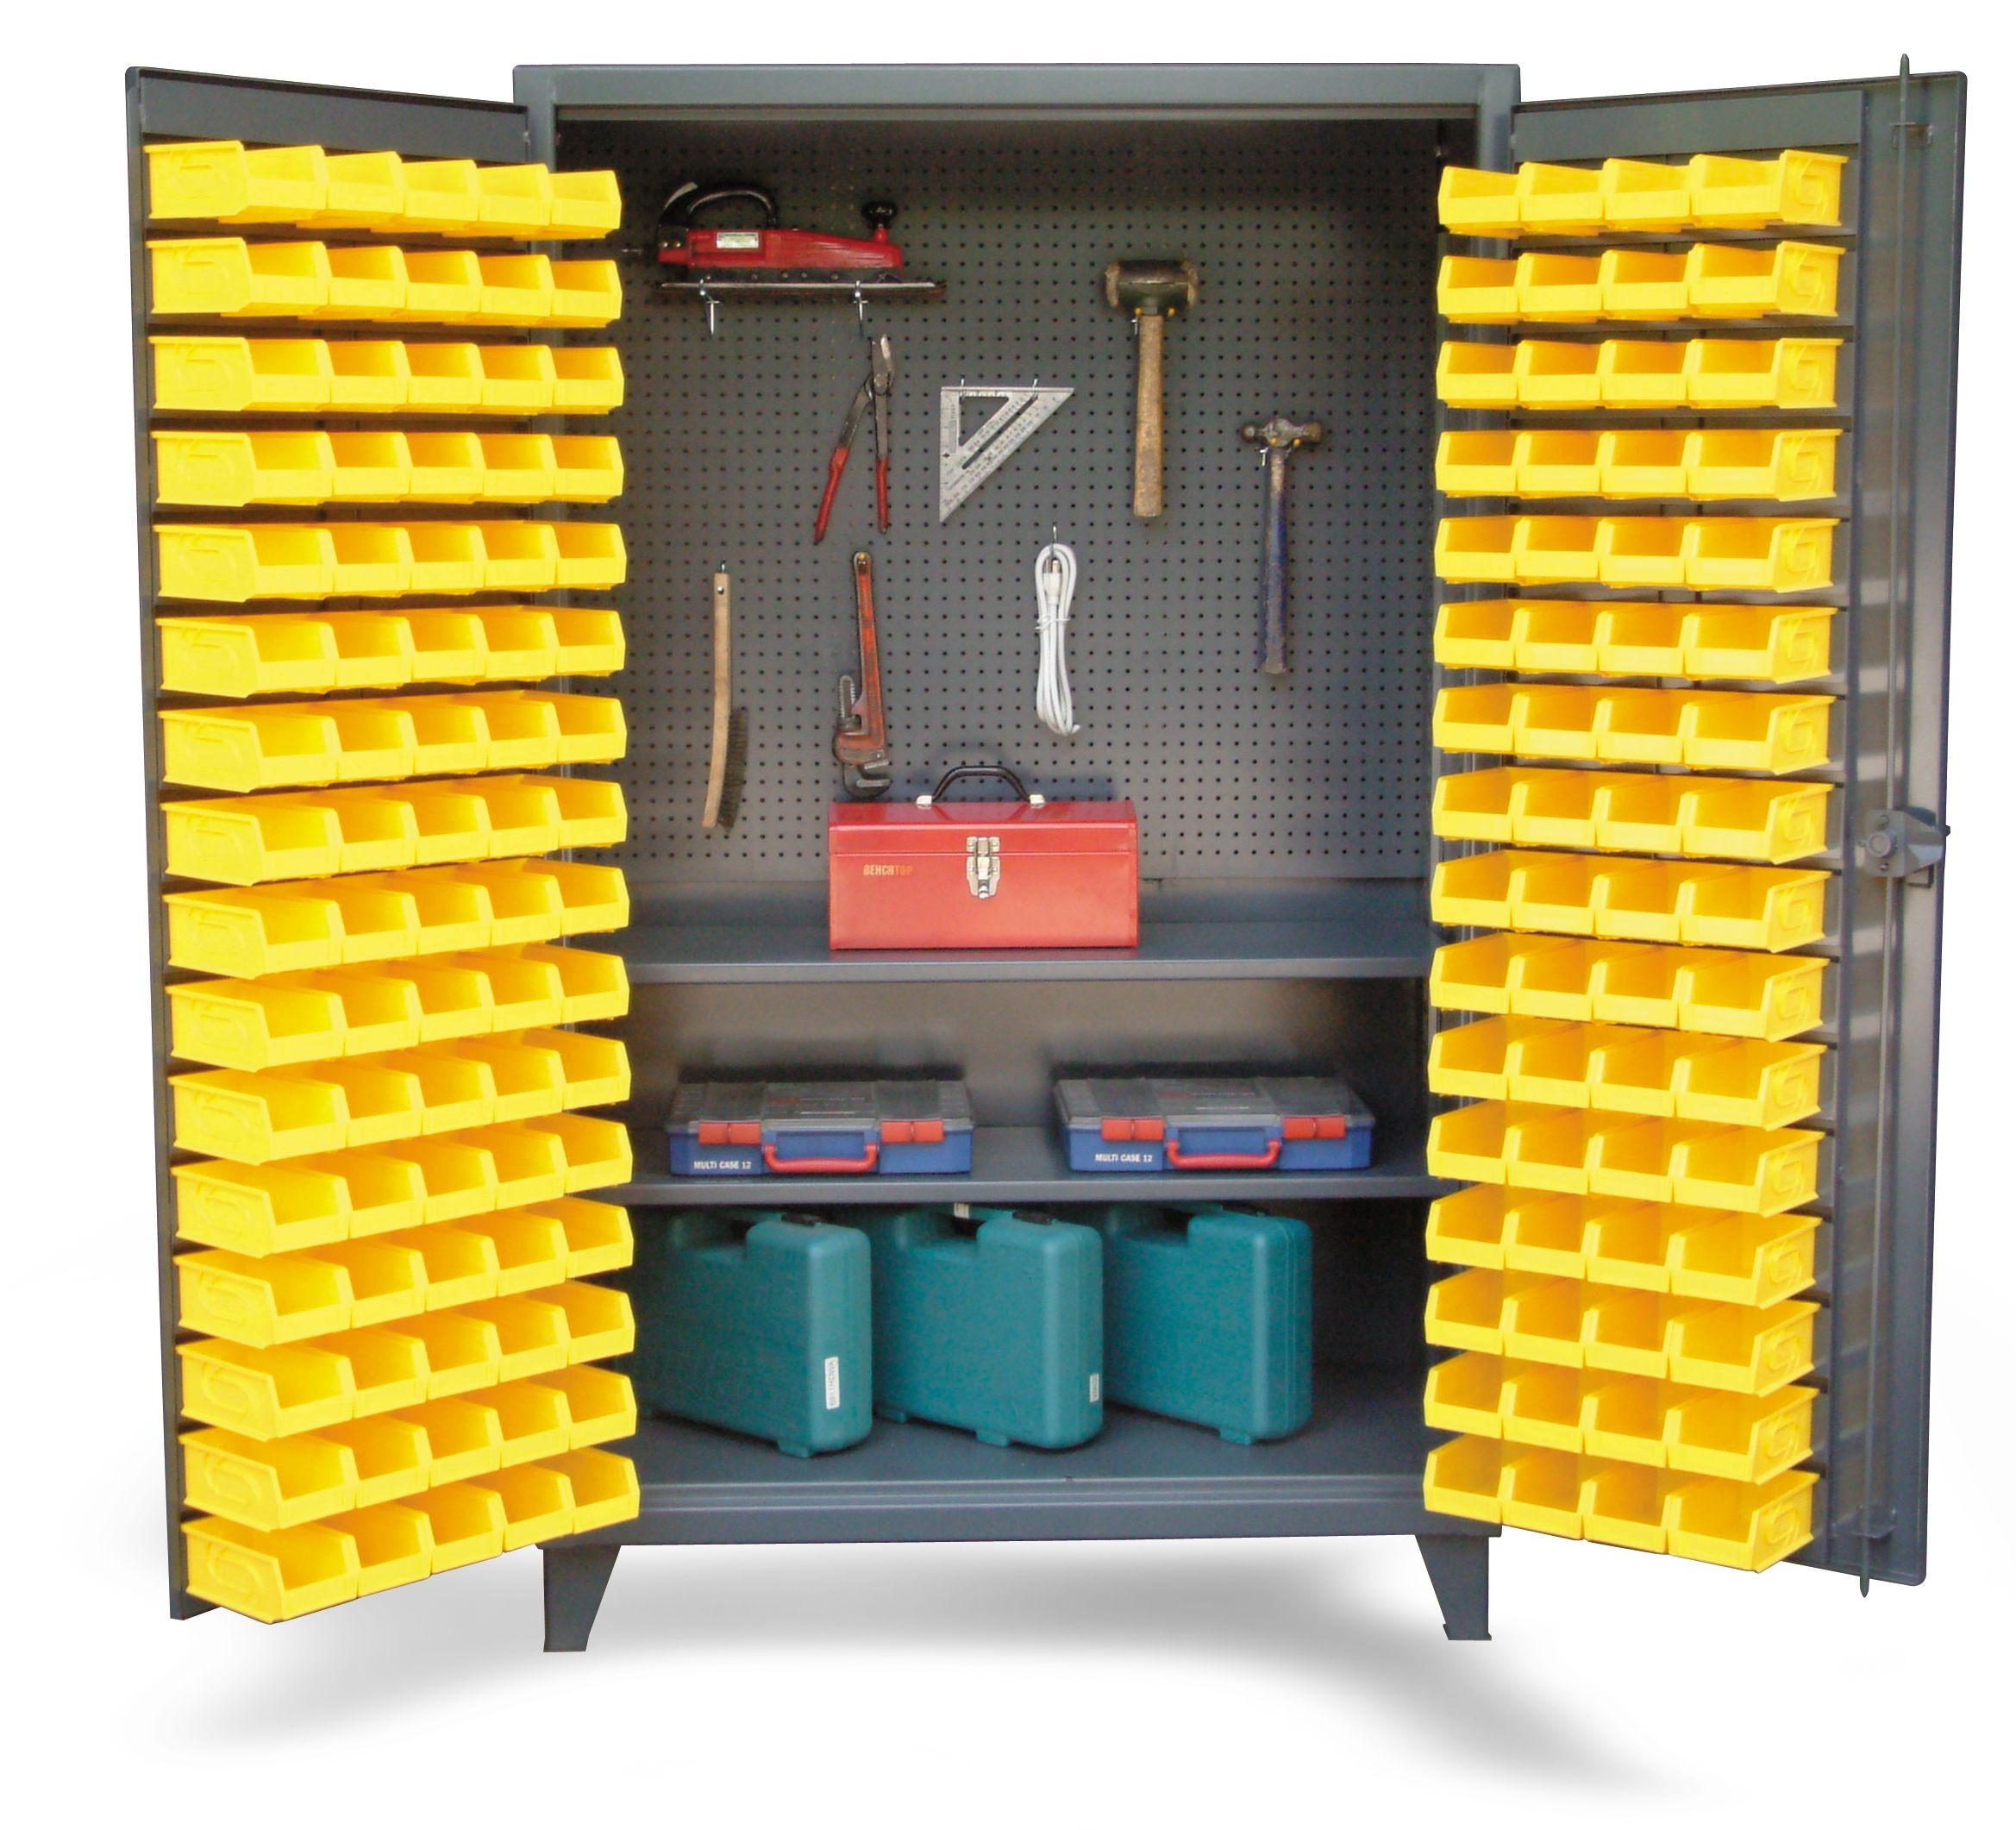 Best ideas about Garage Storage Bins
. Save or Pin Upright Tool Storage Bin Cabinet Bin cabinet with Now.